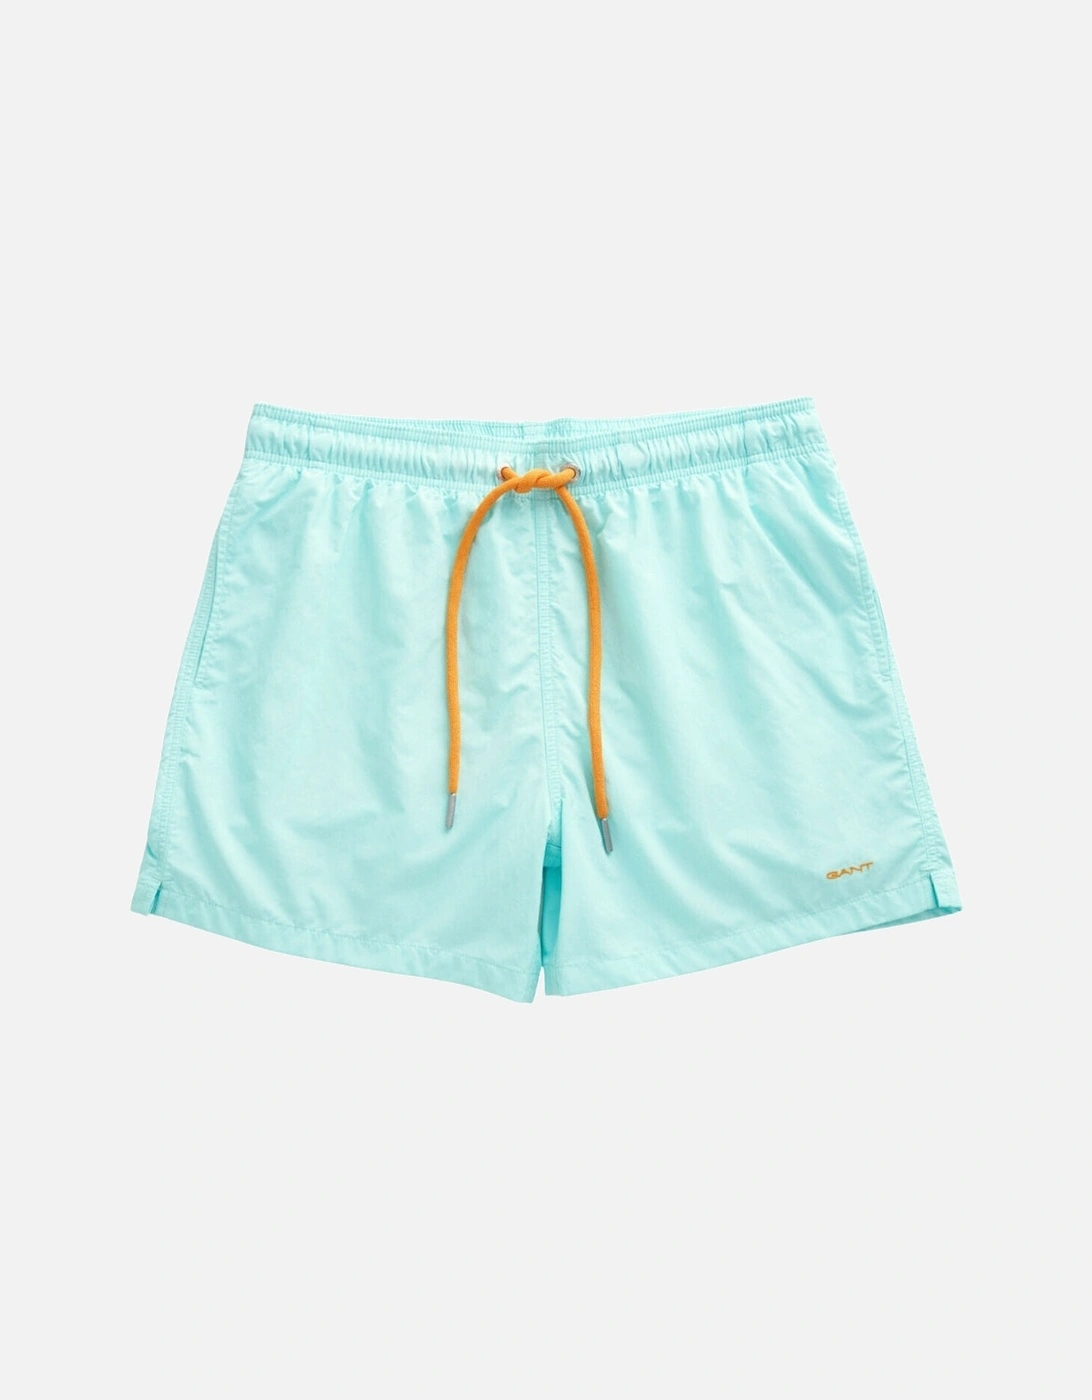 Swim Shorts - Turquoise Mist, 8 of 7